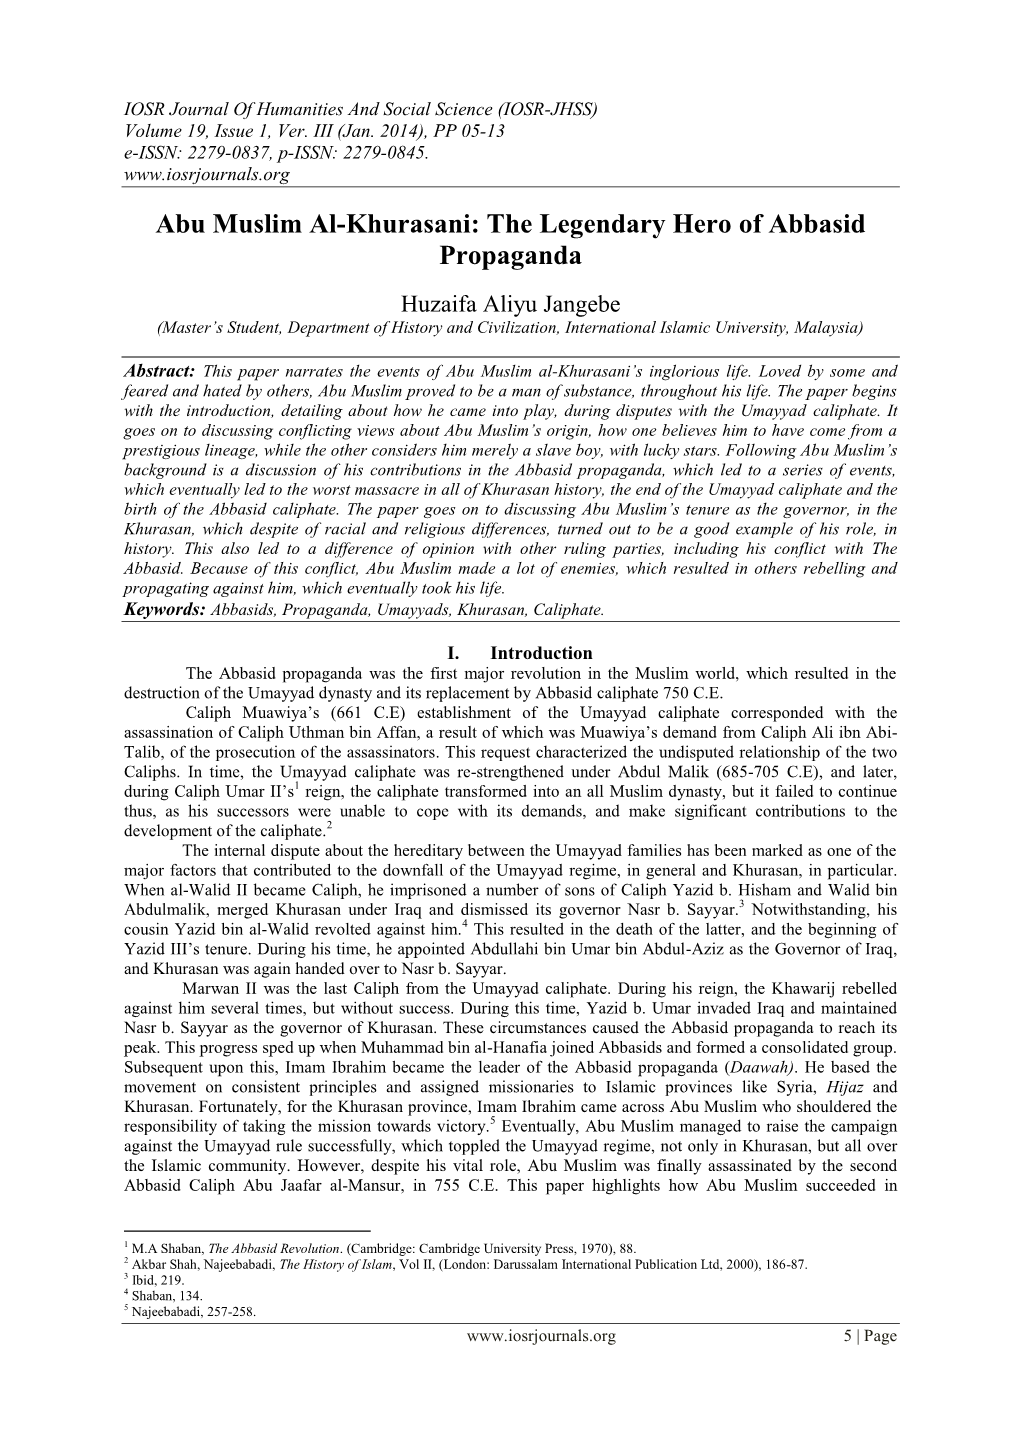 Abu Muslim Al-Khurasani: the Legendary Hero of Abbasid Propaganda